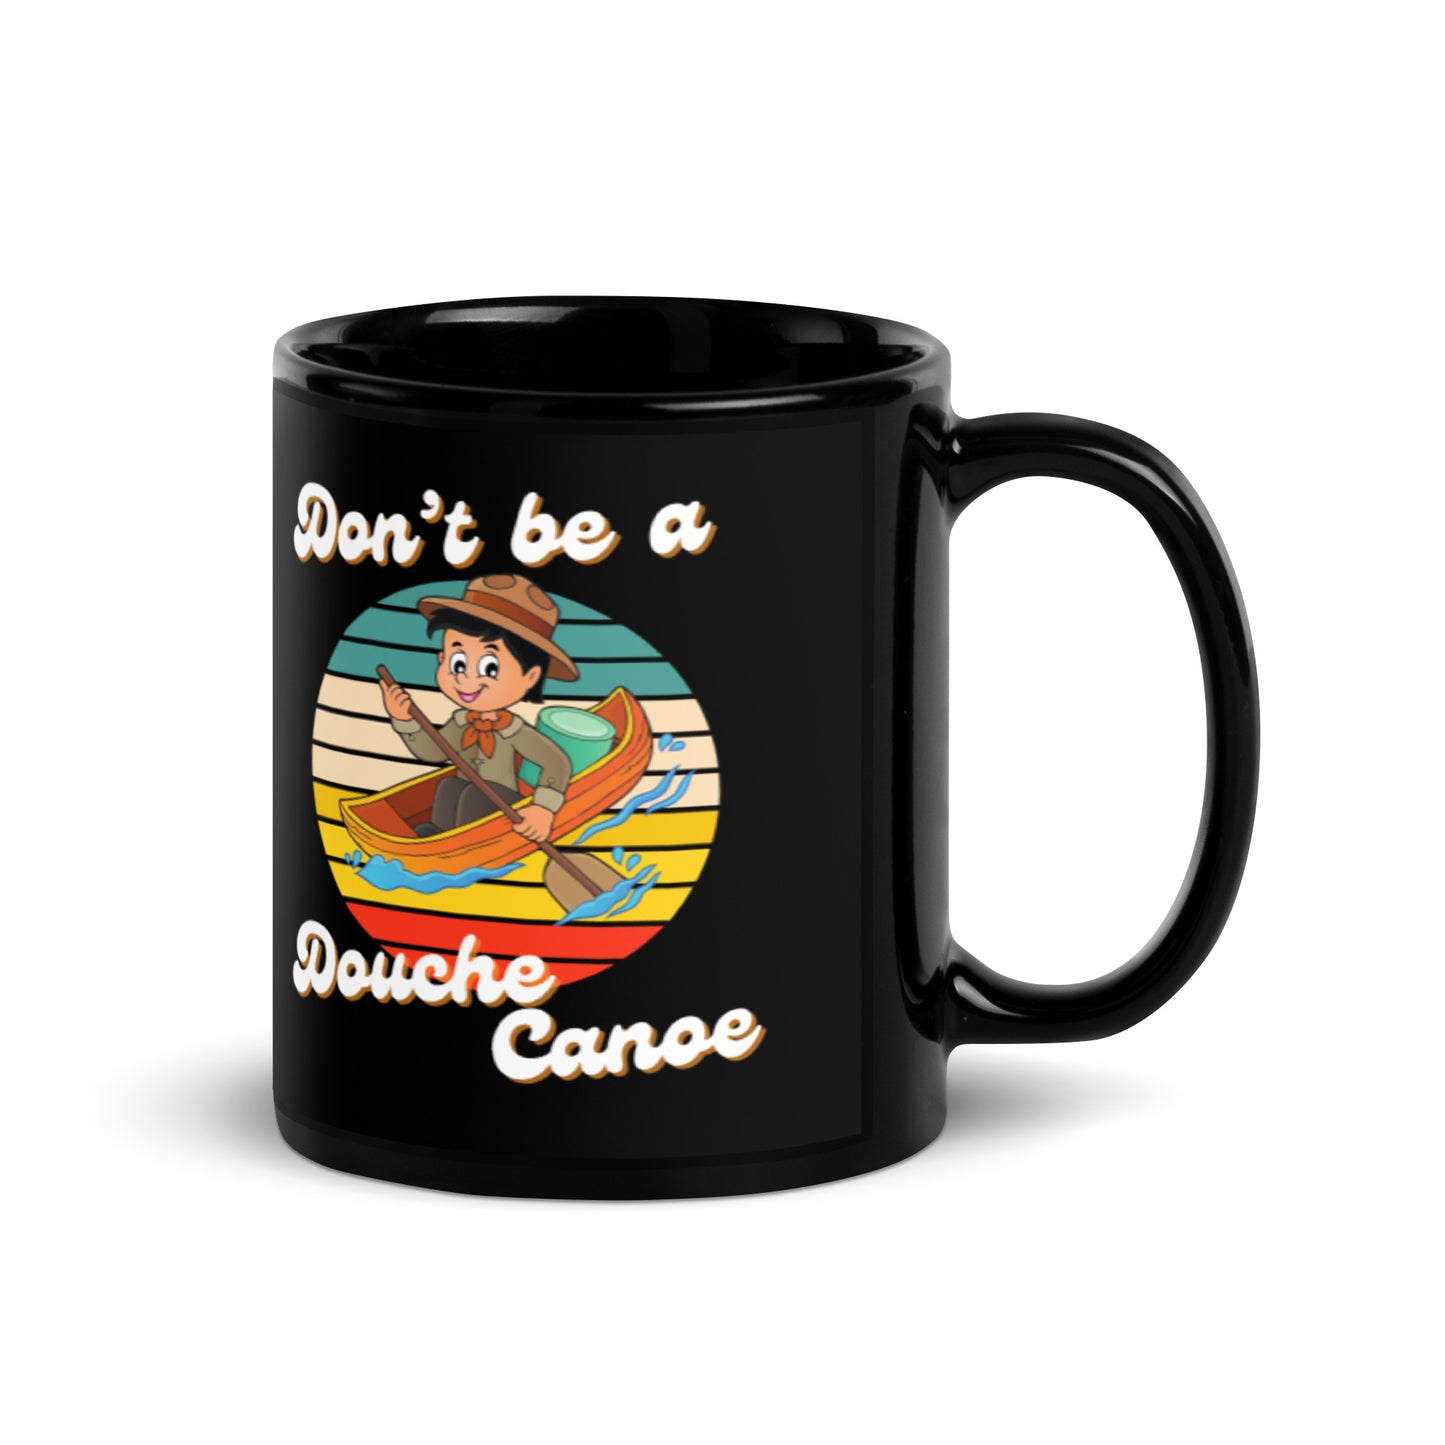 Don’t be a Douche Canoe - Black Glossy Mug